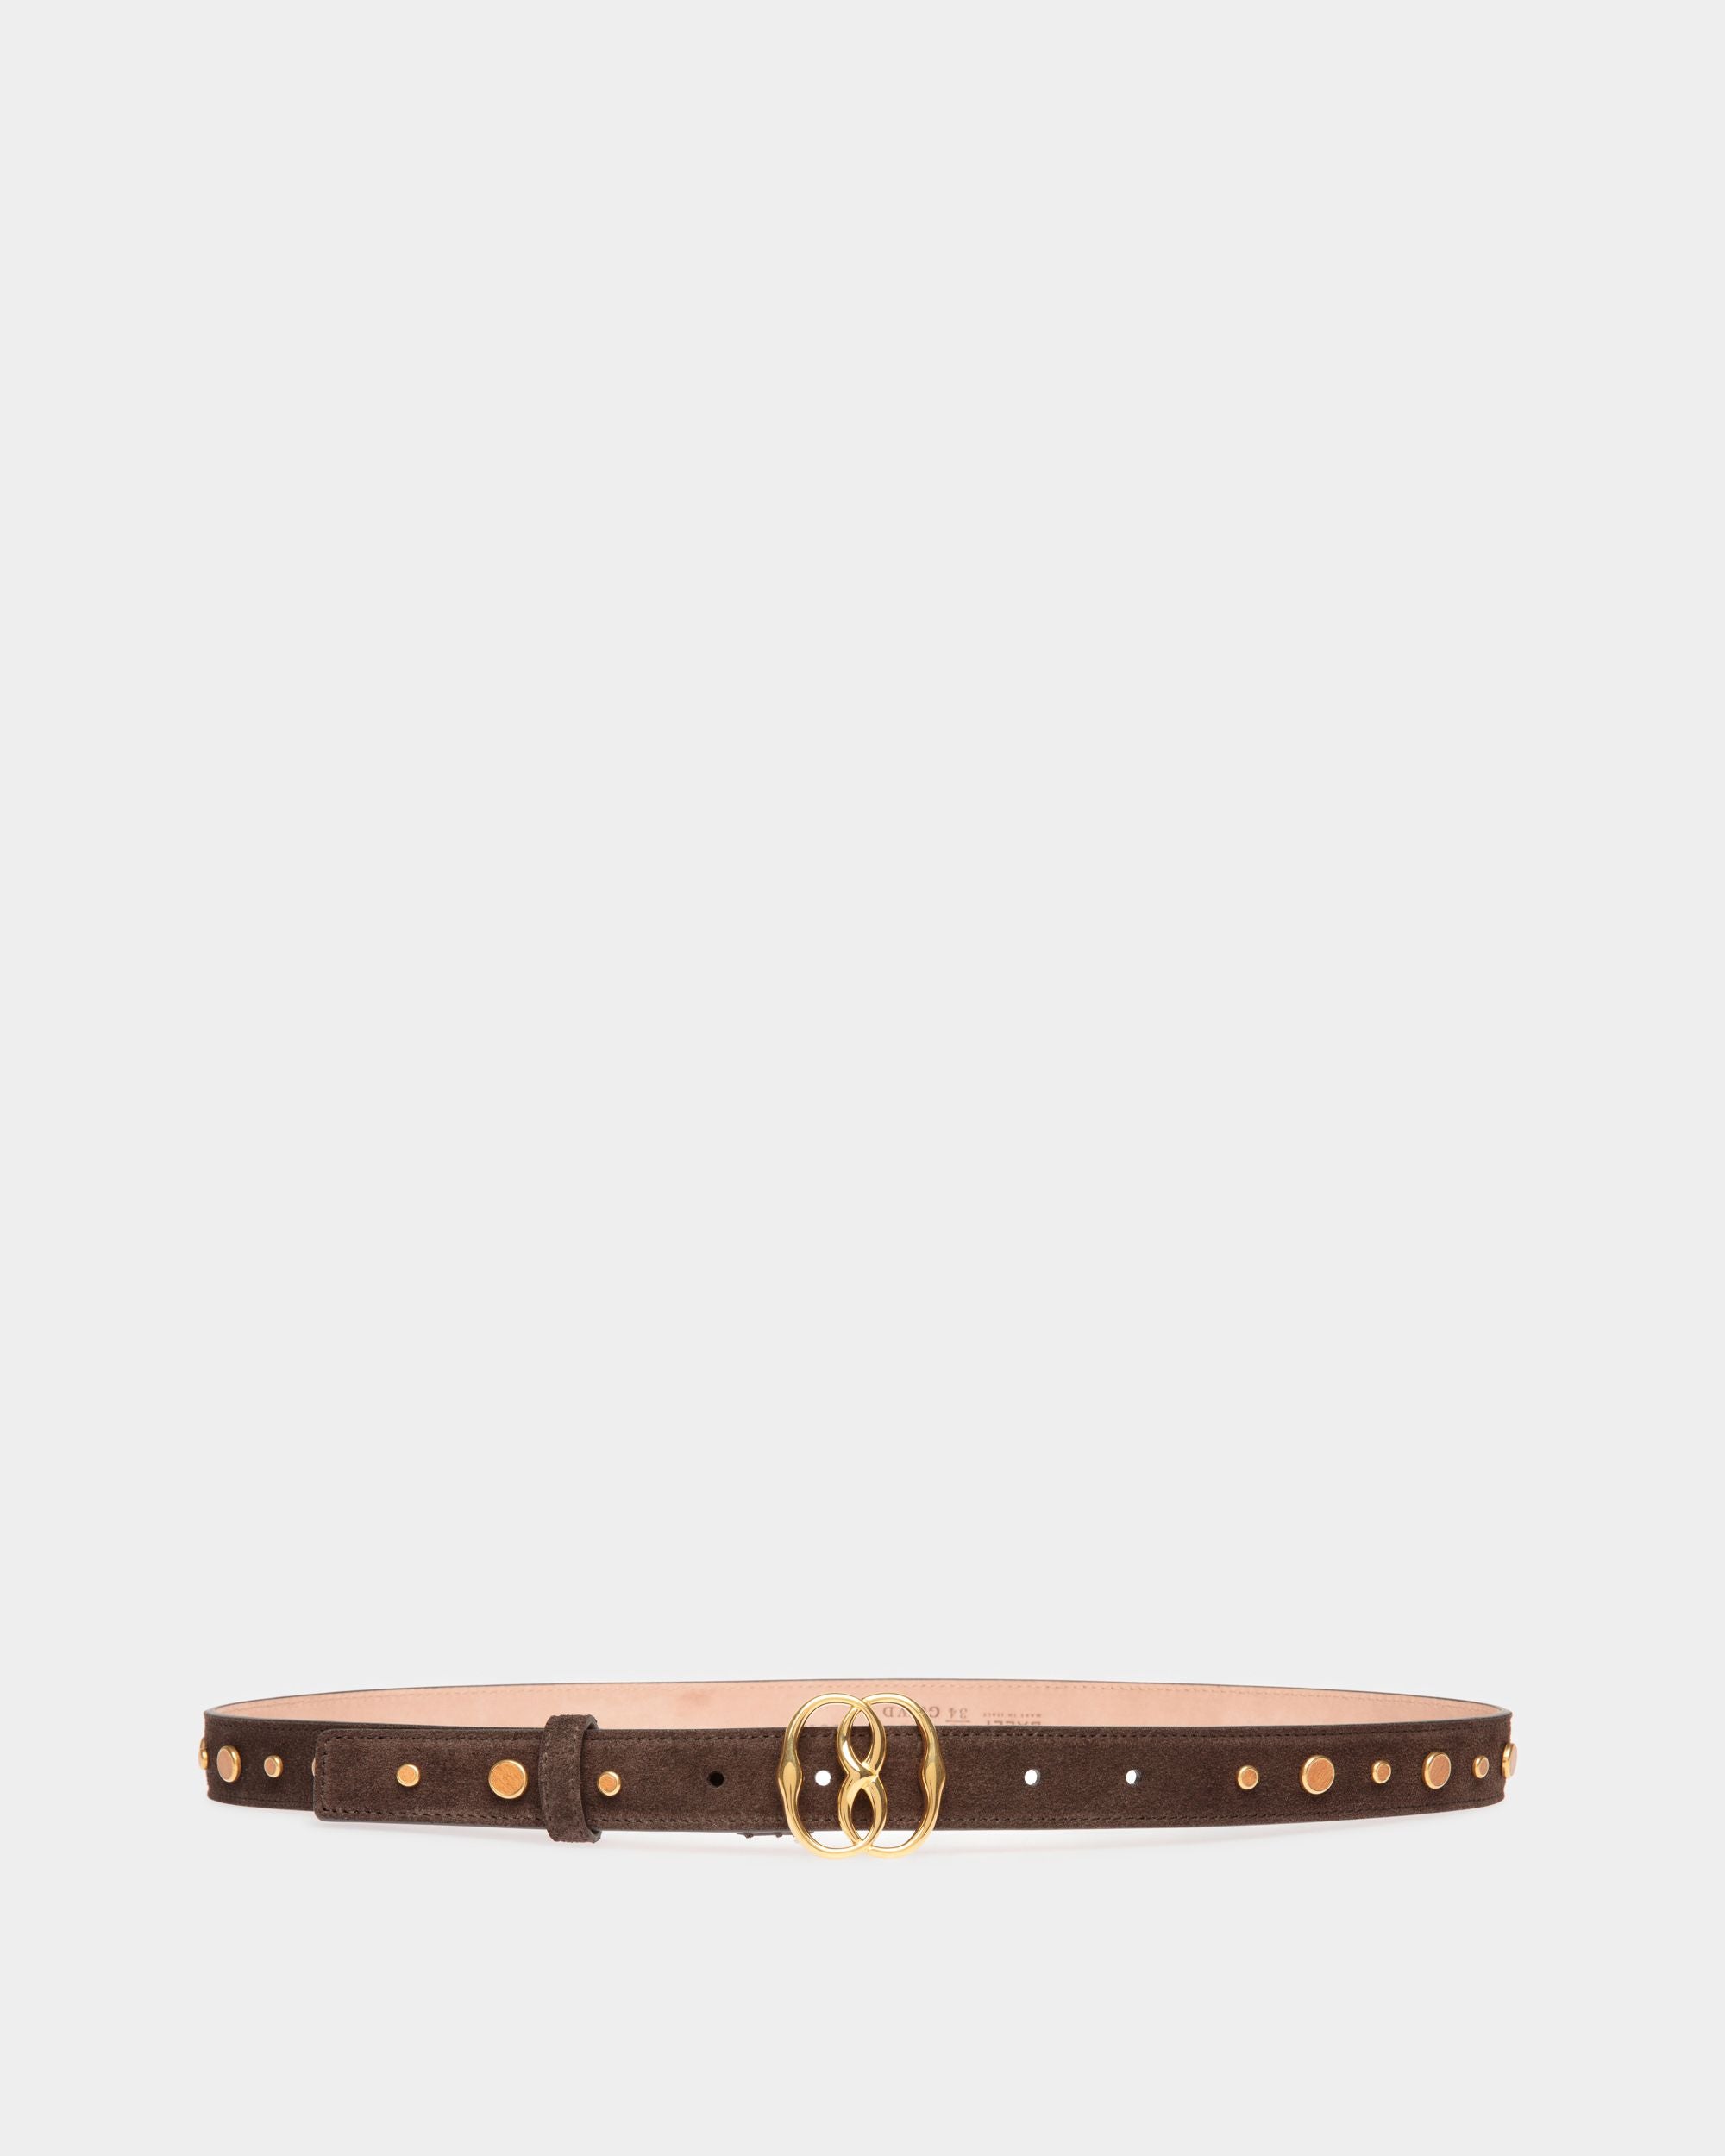 Emblem | Women's Fixed Belt | Brown Leather | Bally | Still Life Front